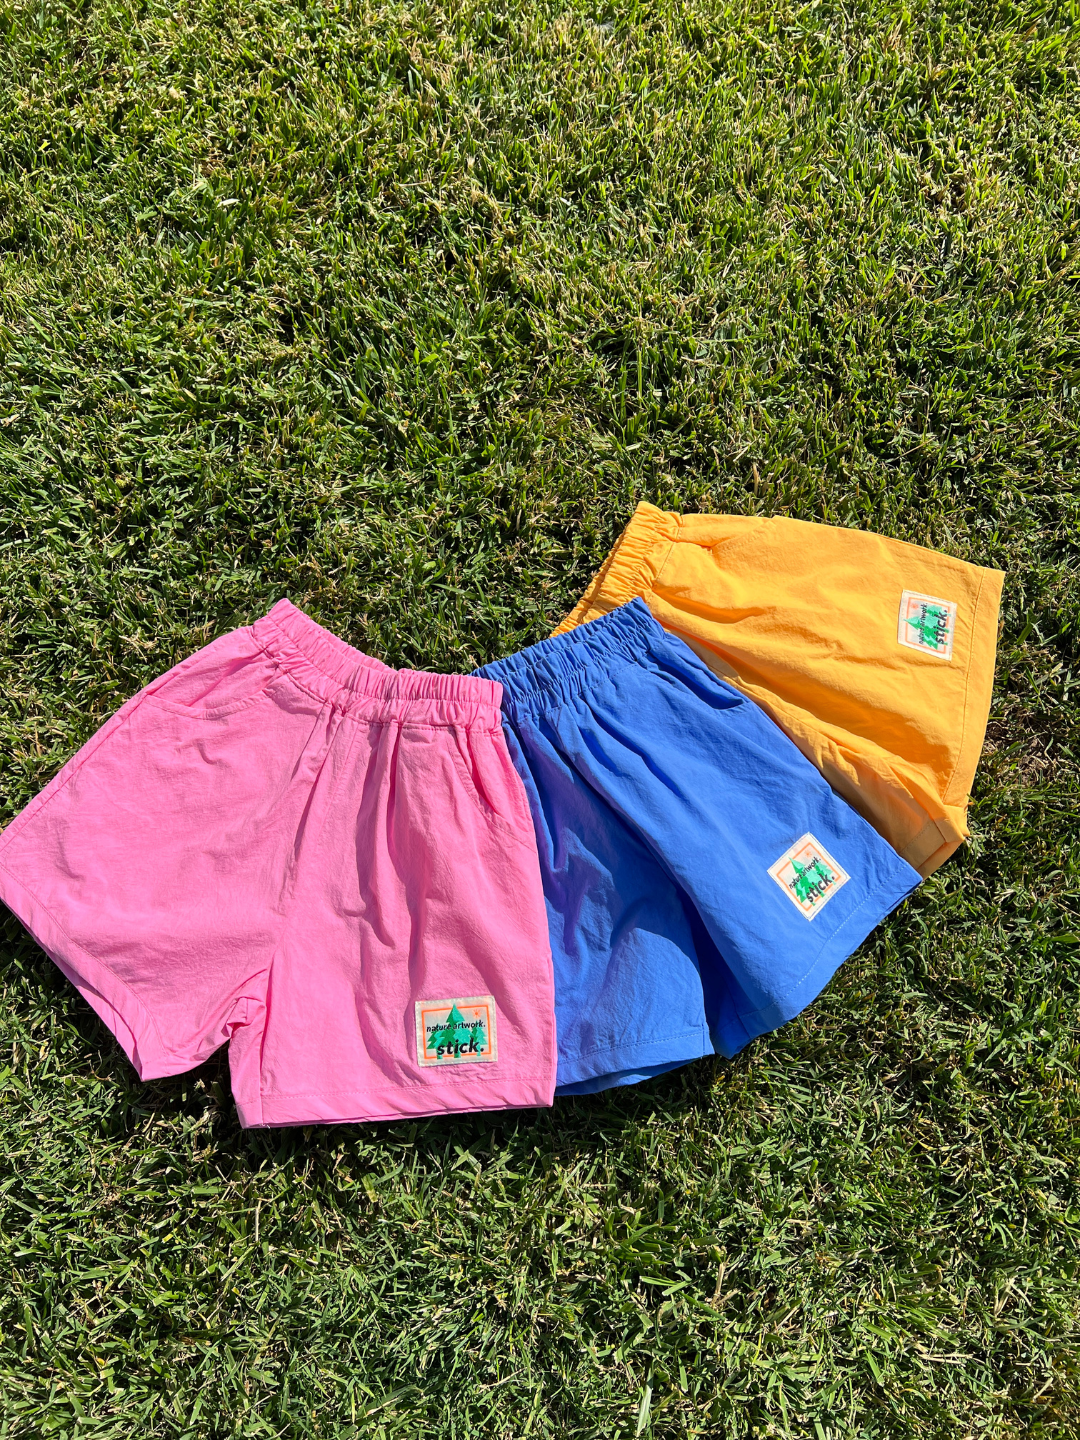 Watermelon | Pink, blue and orange kids' shorts arranged on grass.